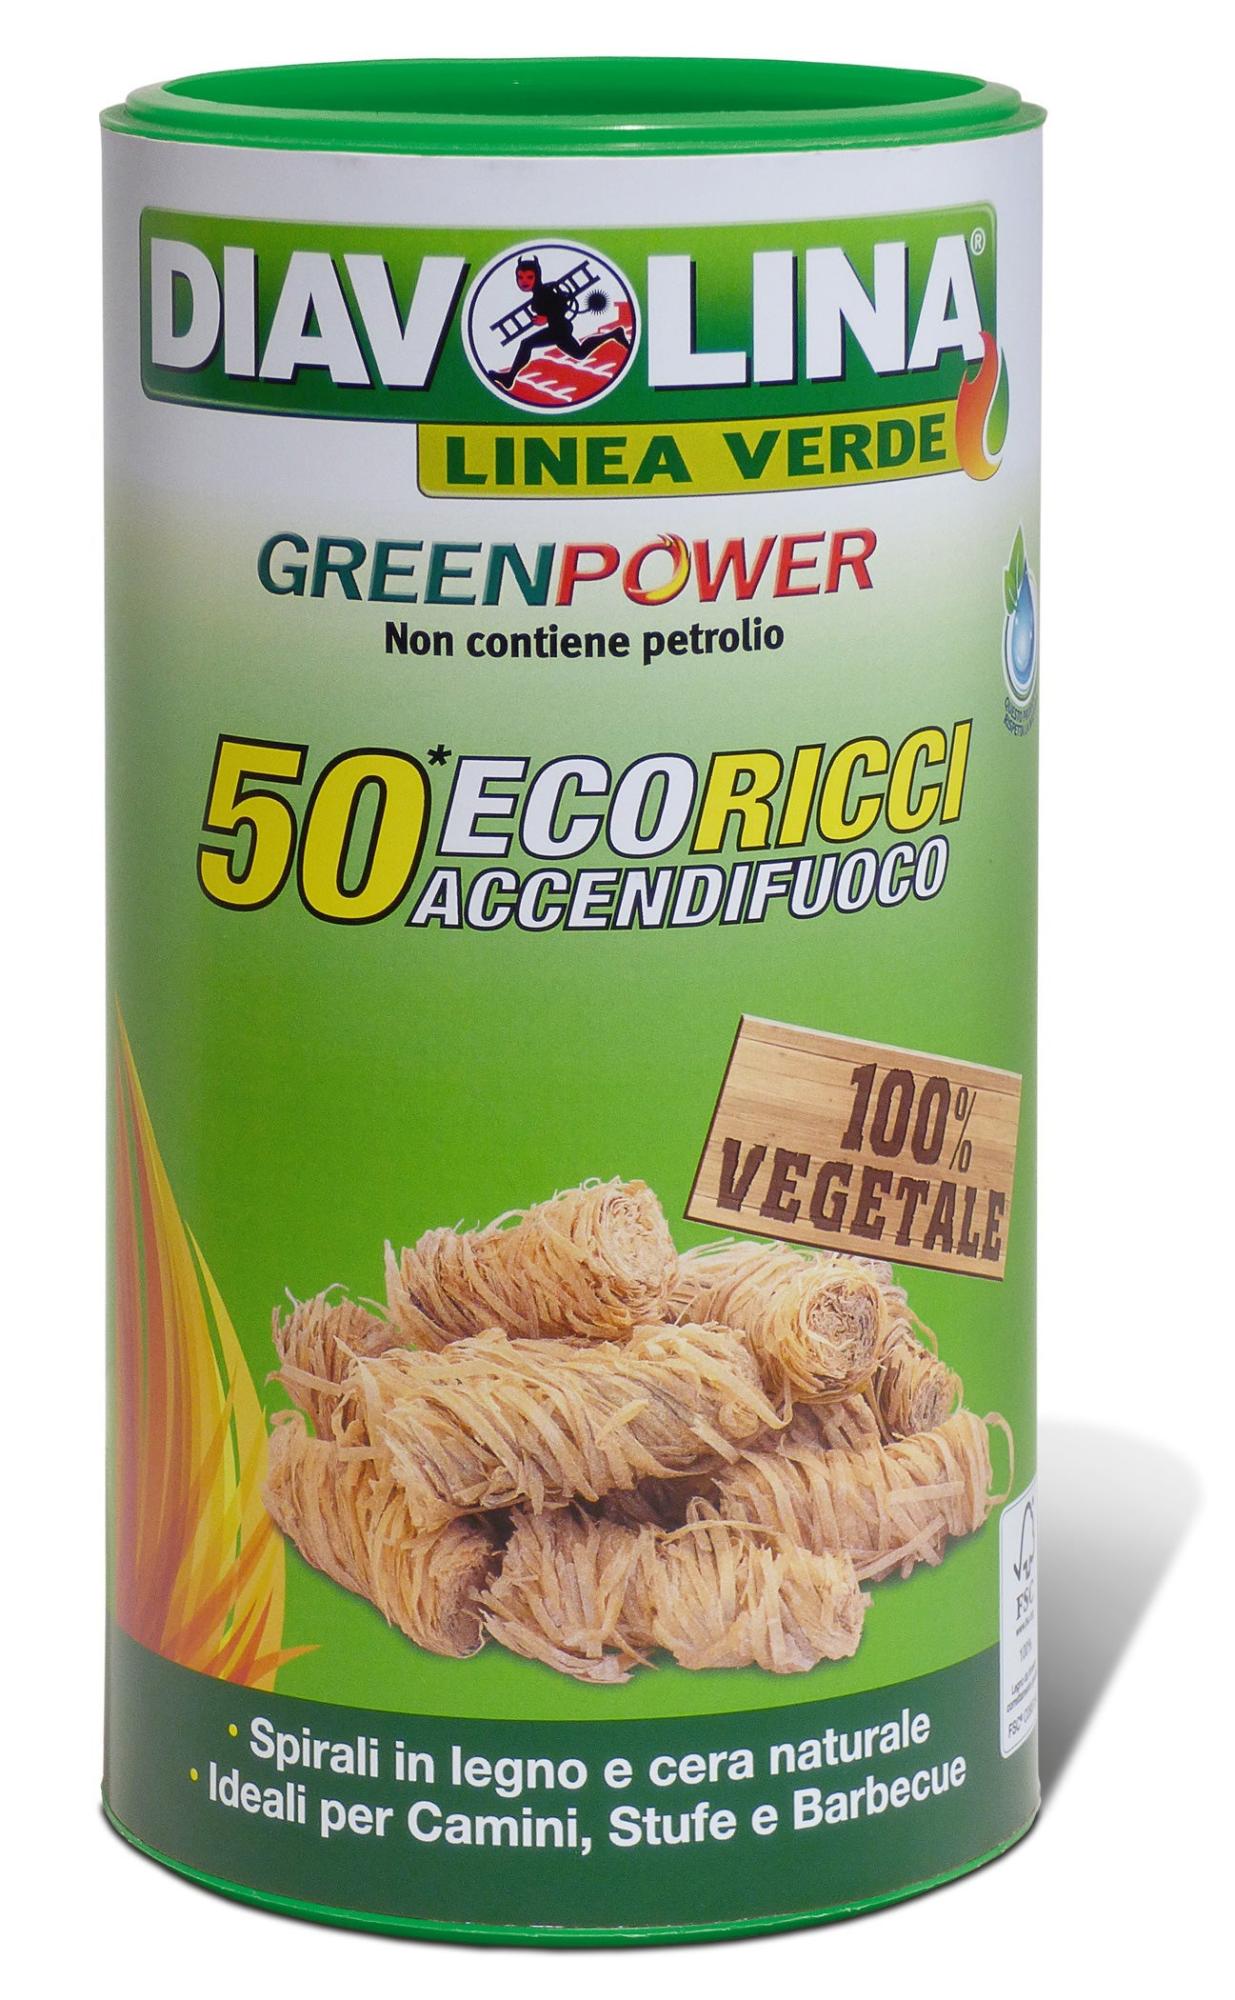 Accendifuoco Diavolina Eco-Ricci 50 pezzi